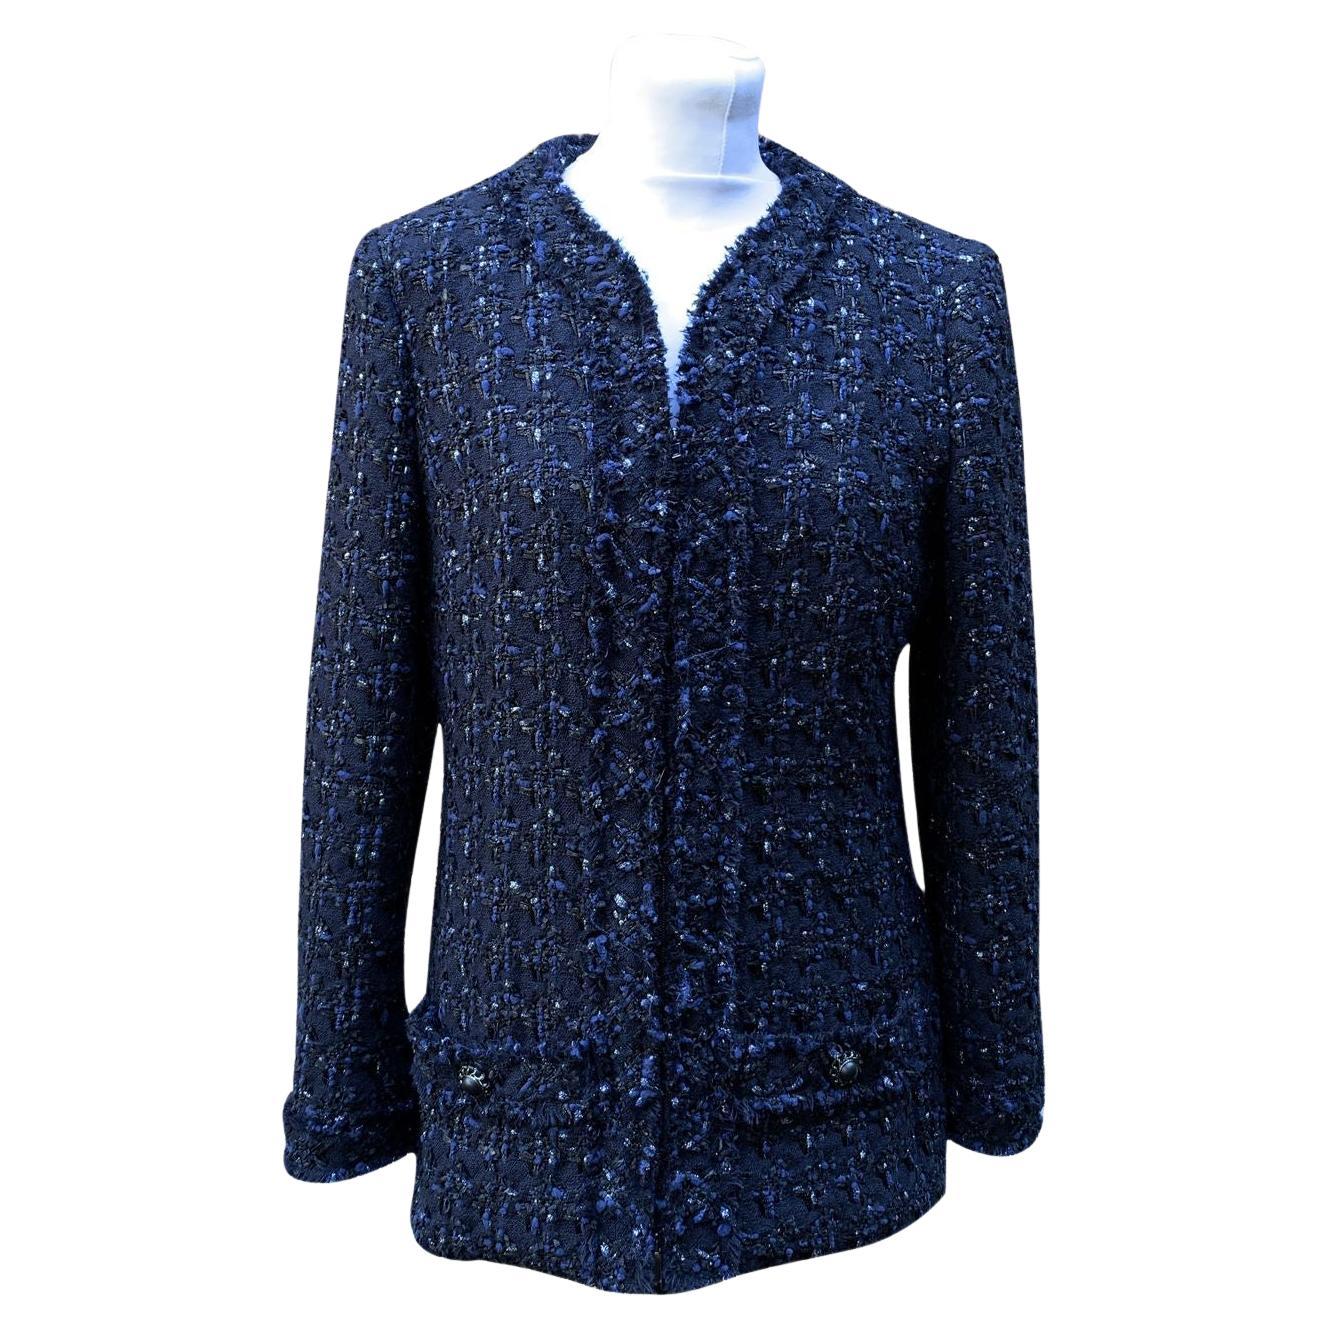 Chanel 2016 Navy Blue Wool Zip Front Bouclé Jacket Size 38 FR For Sale